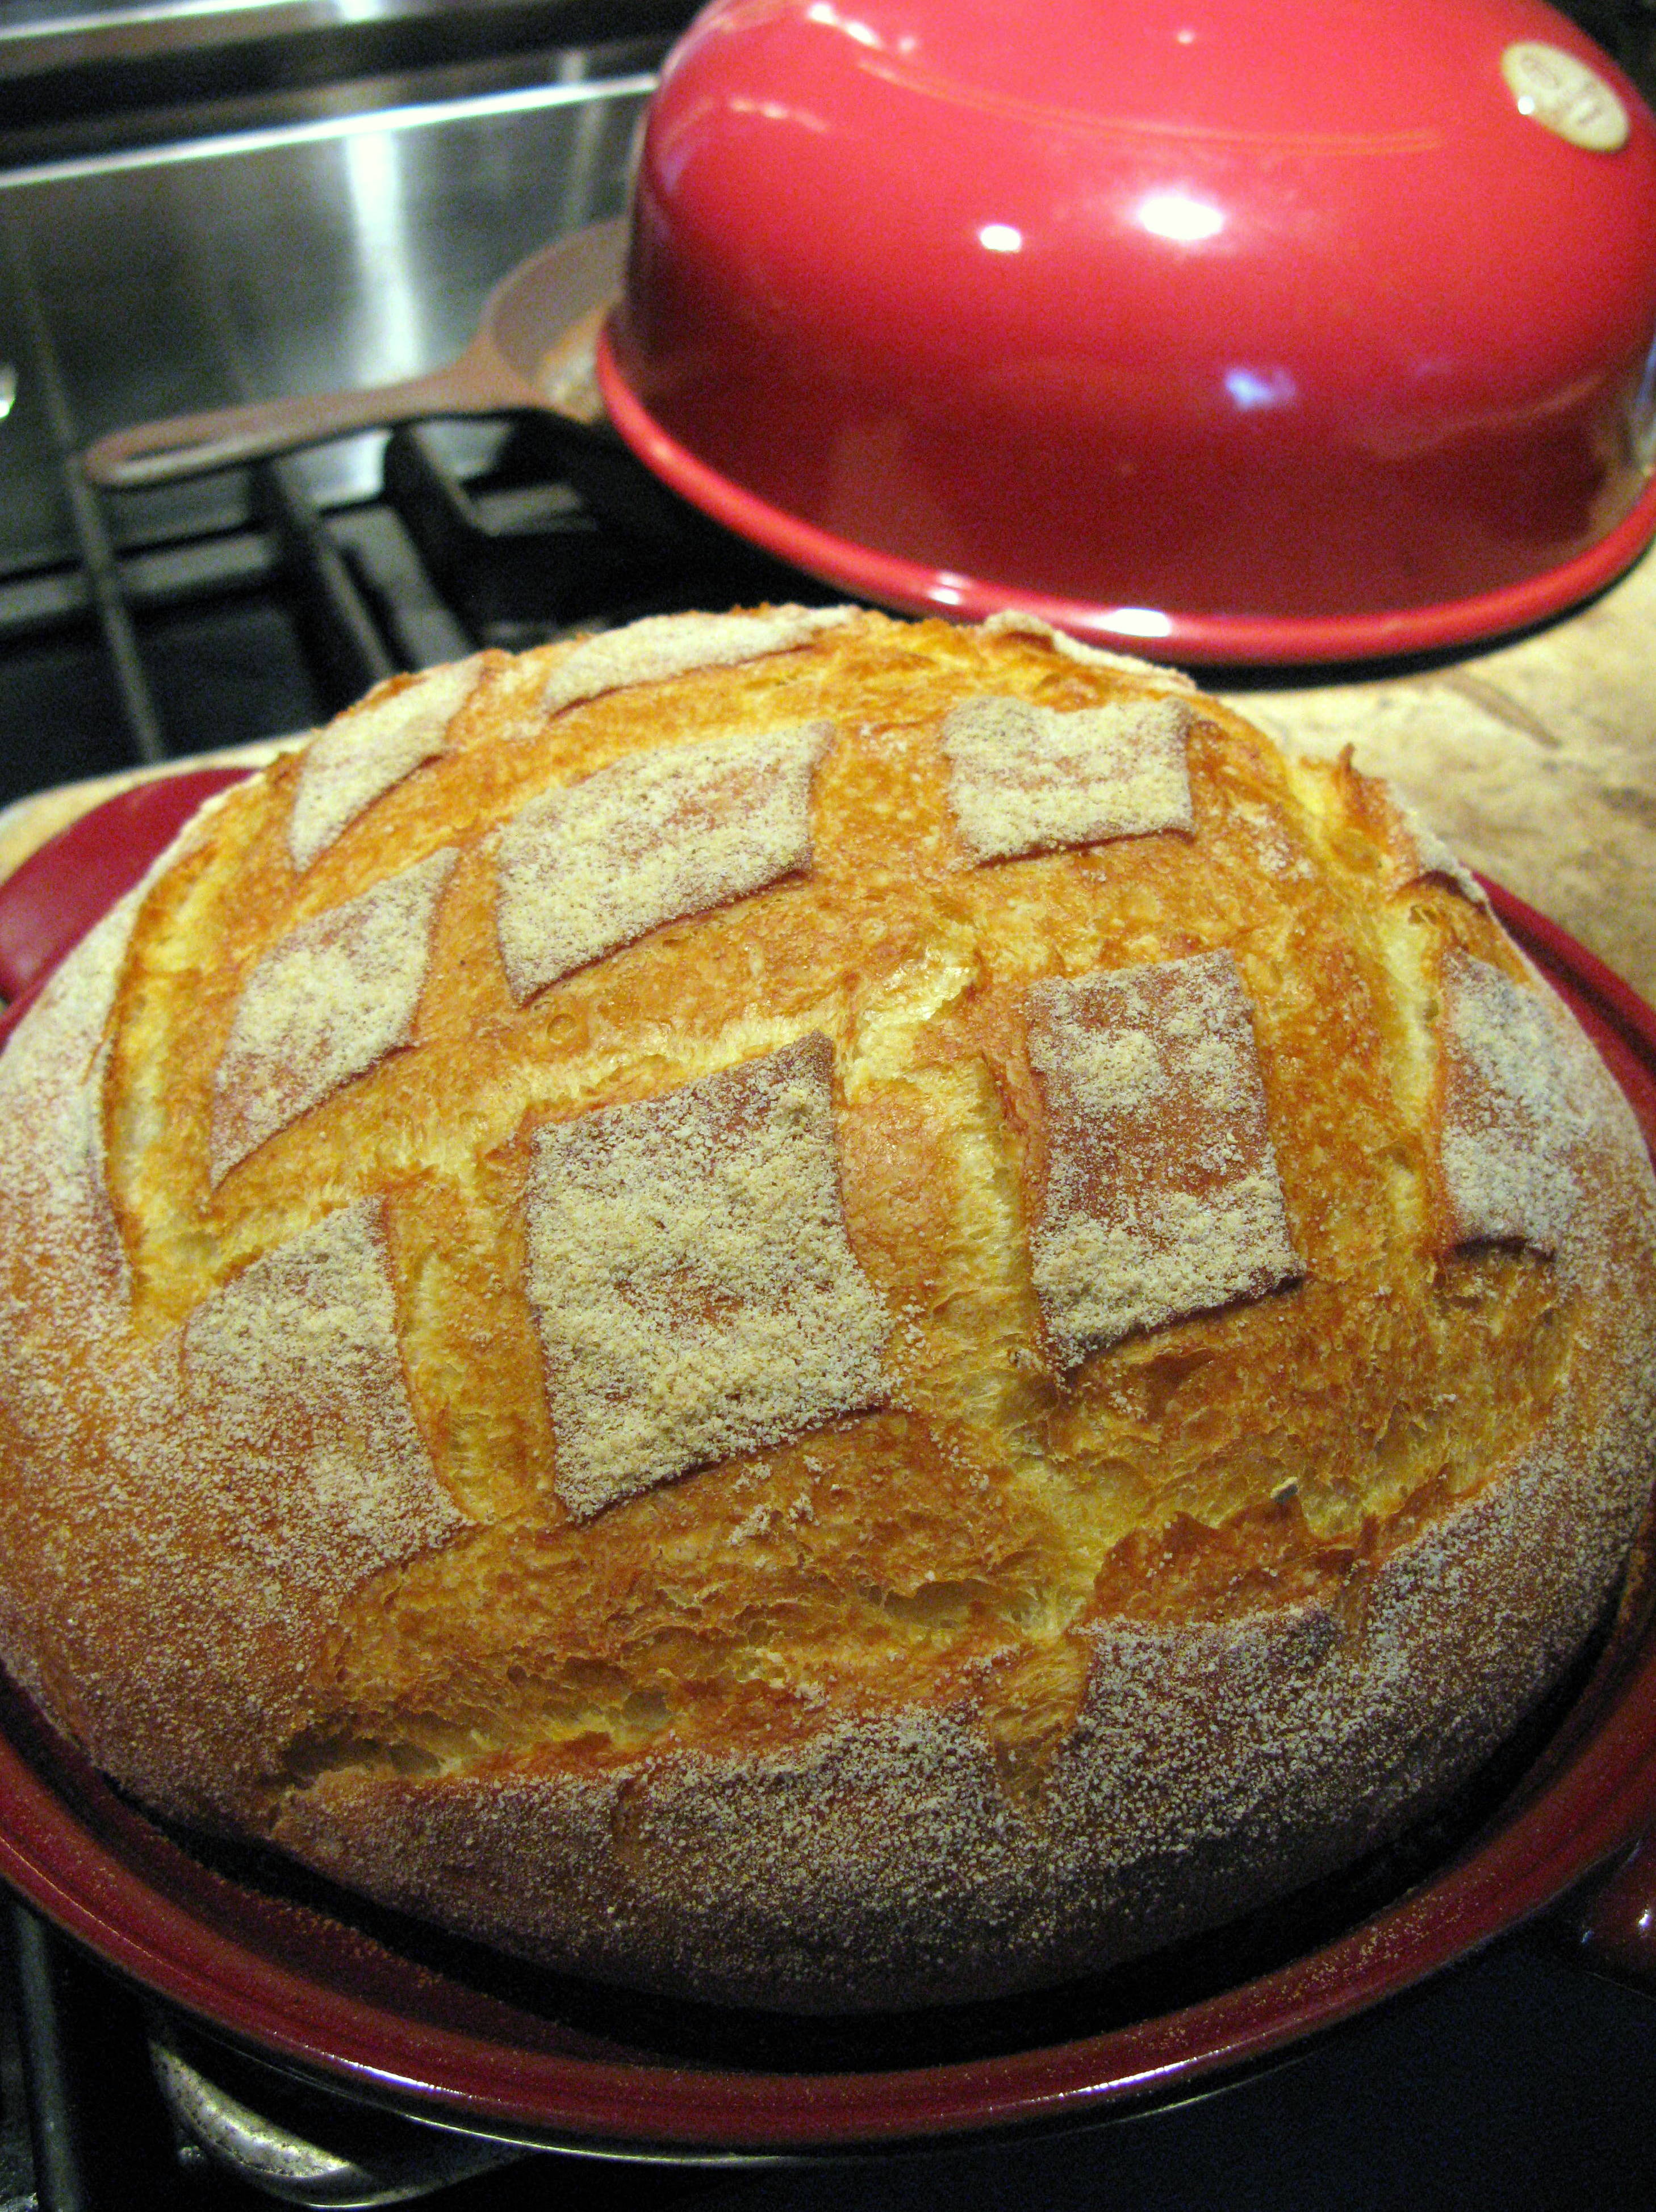 https://priscillamartel.com/wp-content/uploads/2016/10/Well-risen-golden-brown-loaf-after-baking.jpg